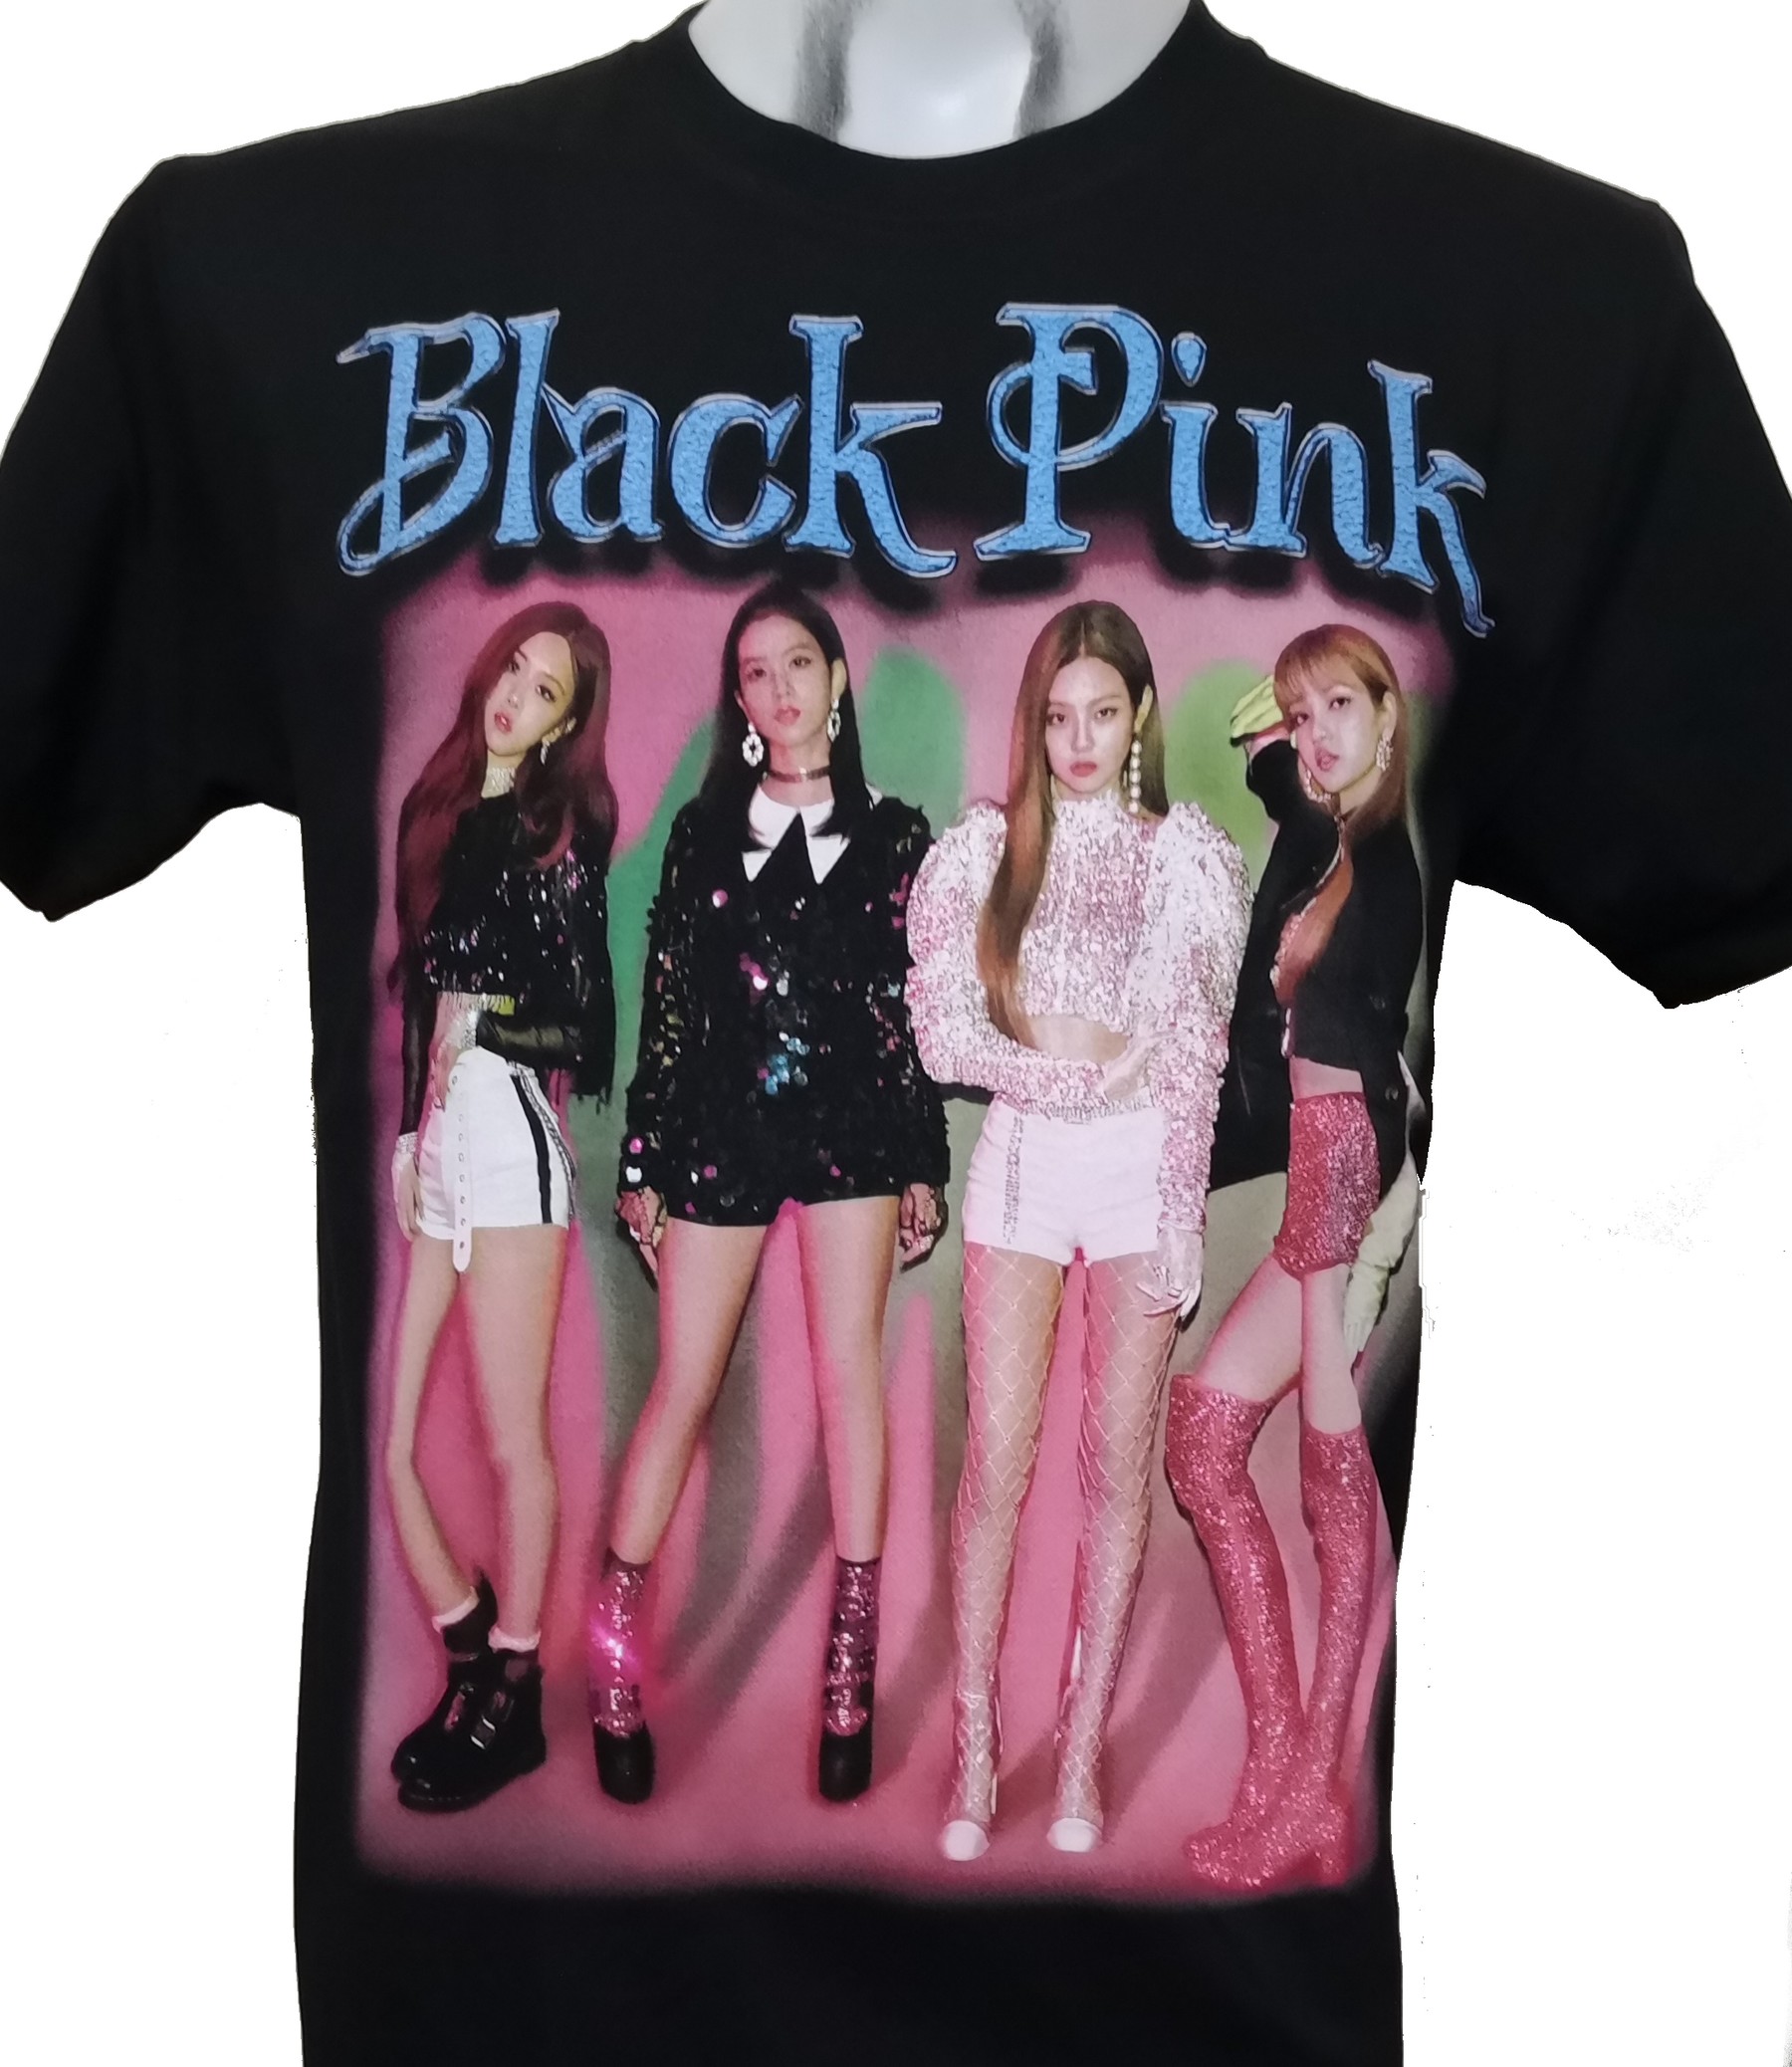 Blackpink t-shirt size L